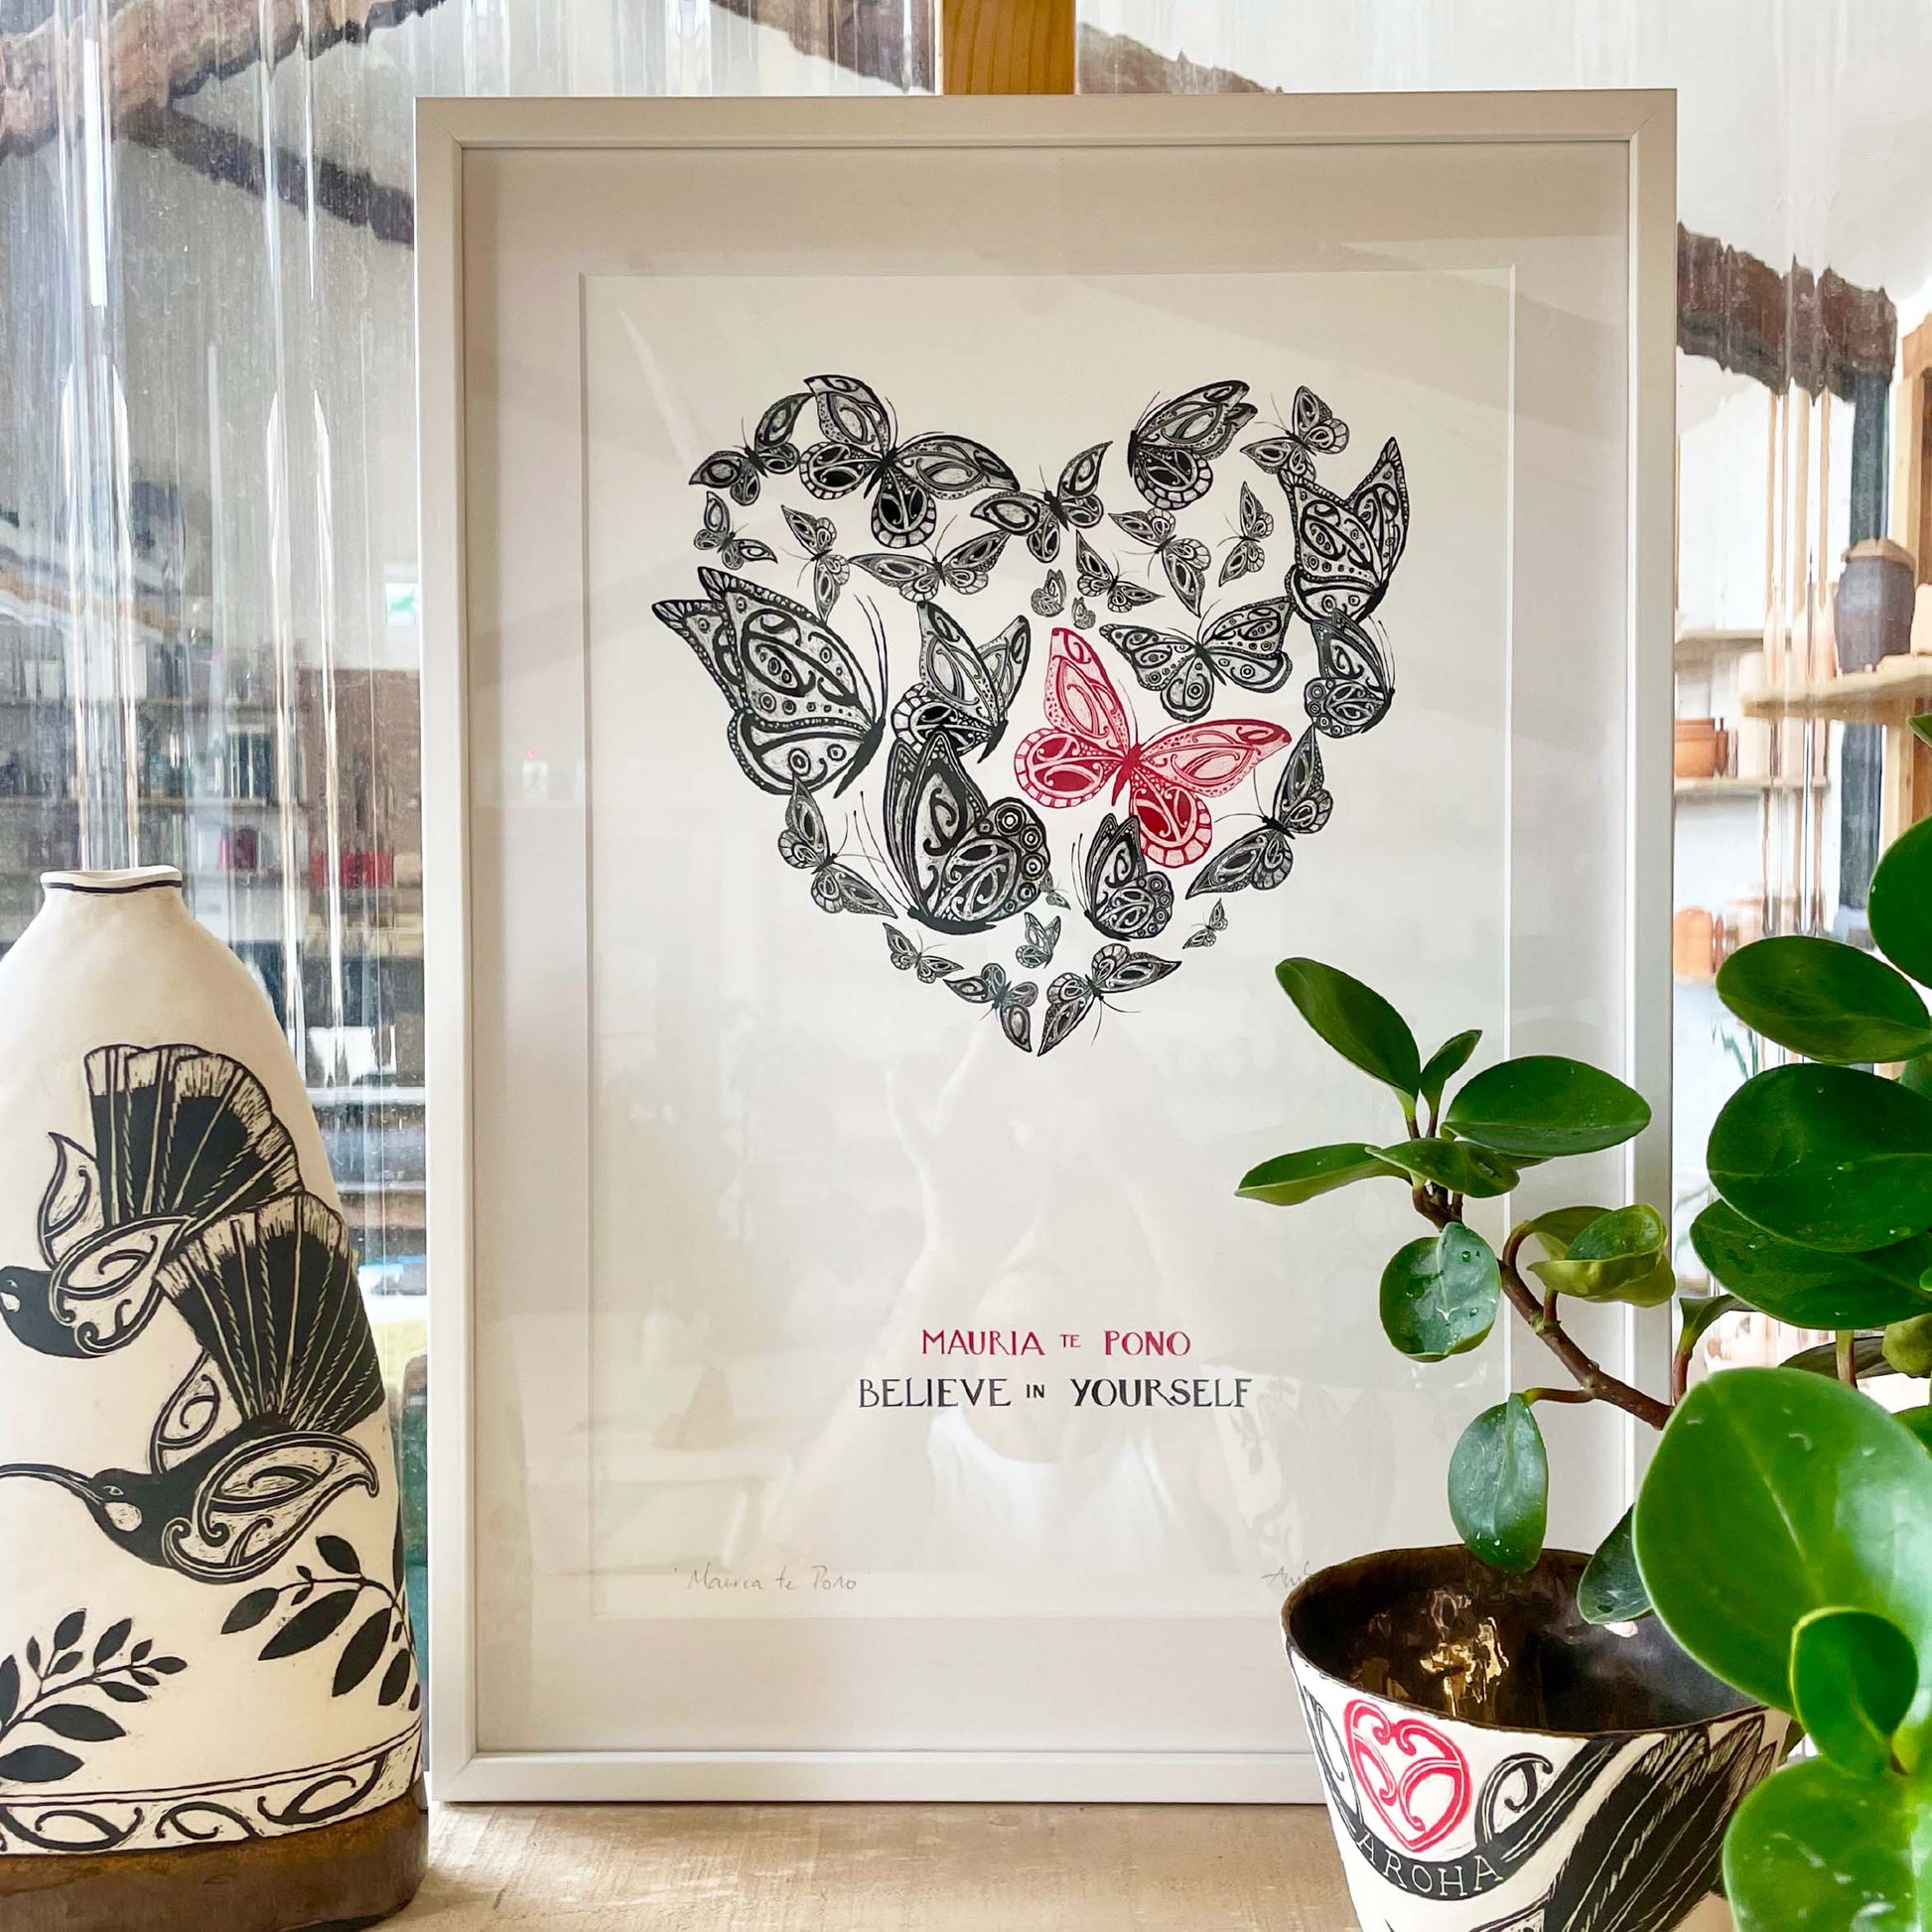 Mauria te Pono believe in yourself nz art print with maori art design butterflies in an aroha heart shape. With words in te reo maori and english. Nz wall art by Amber Smith.